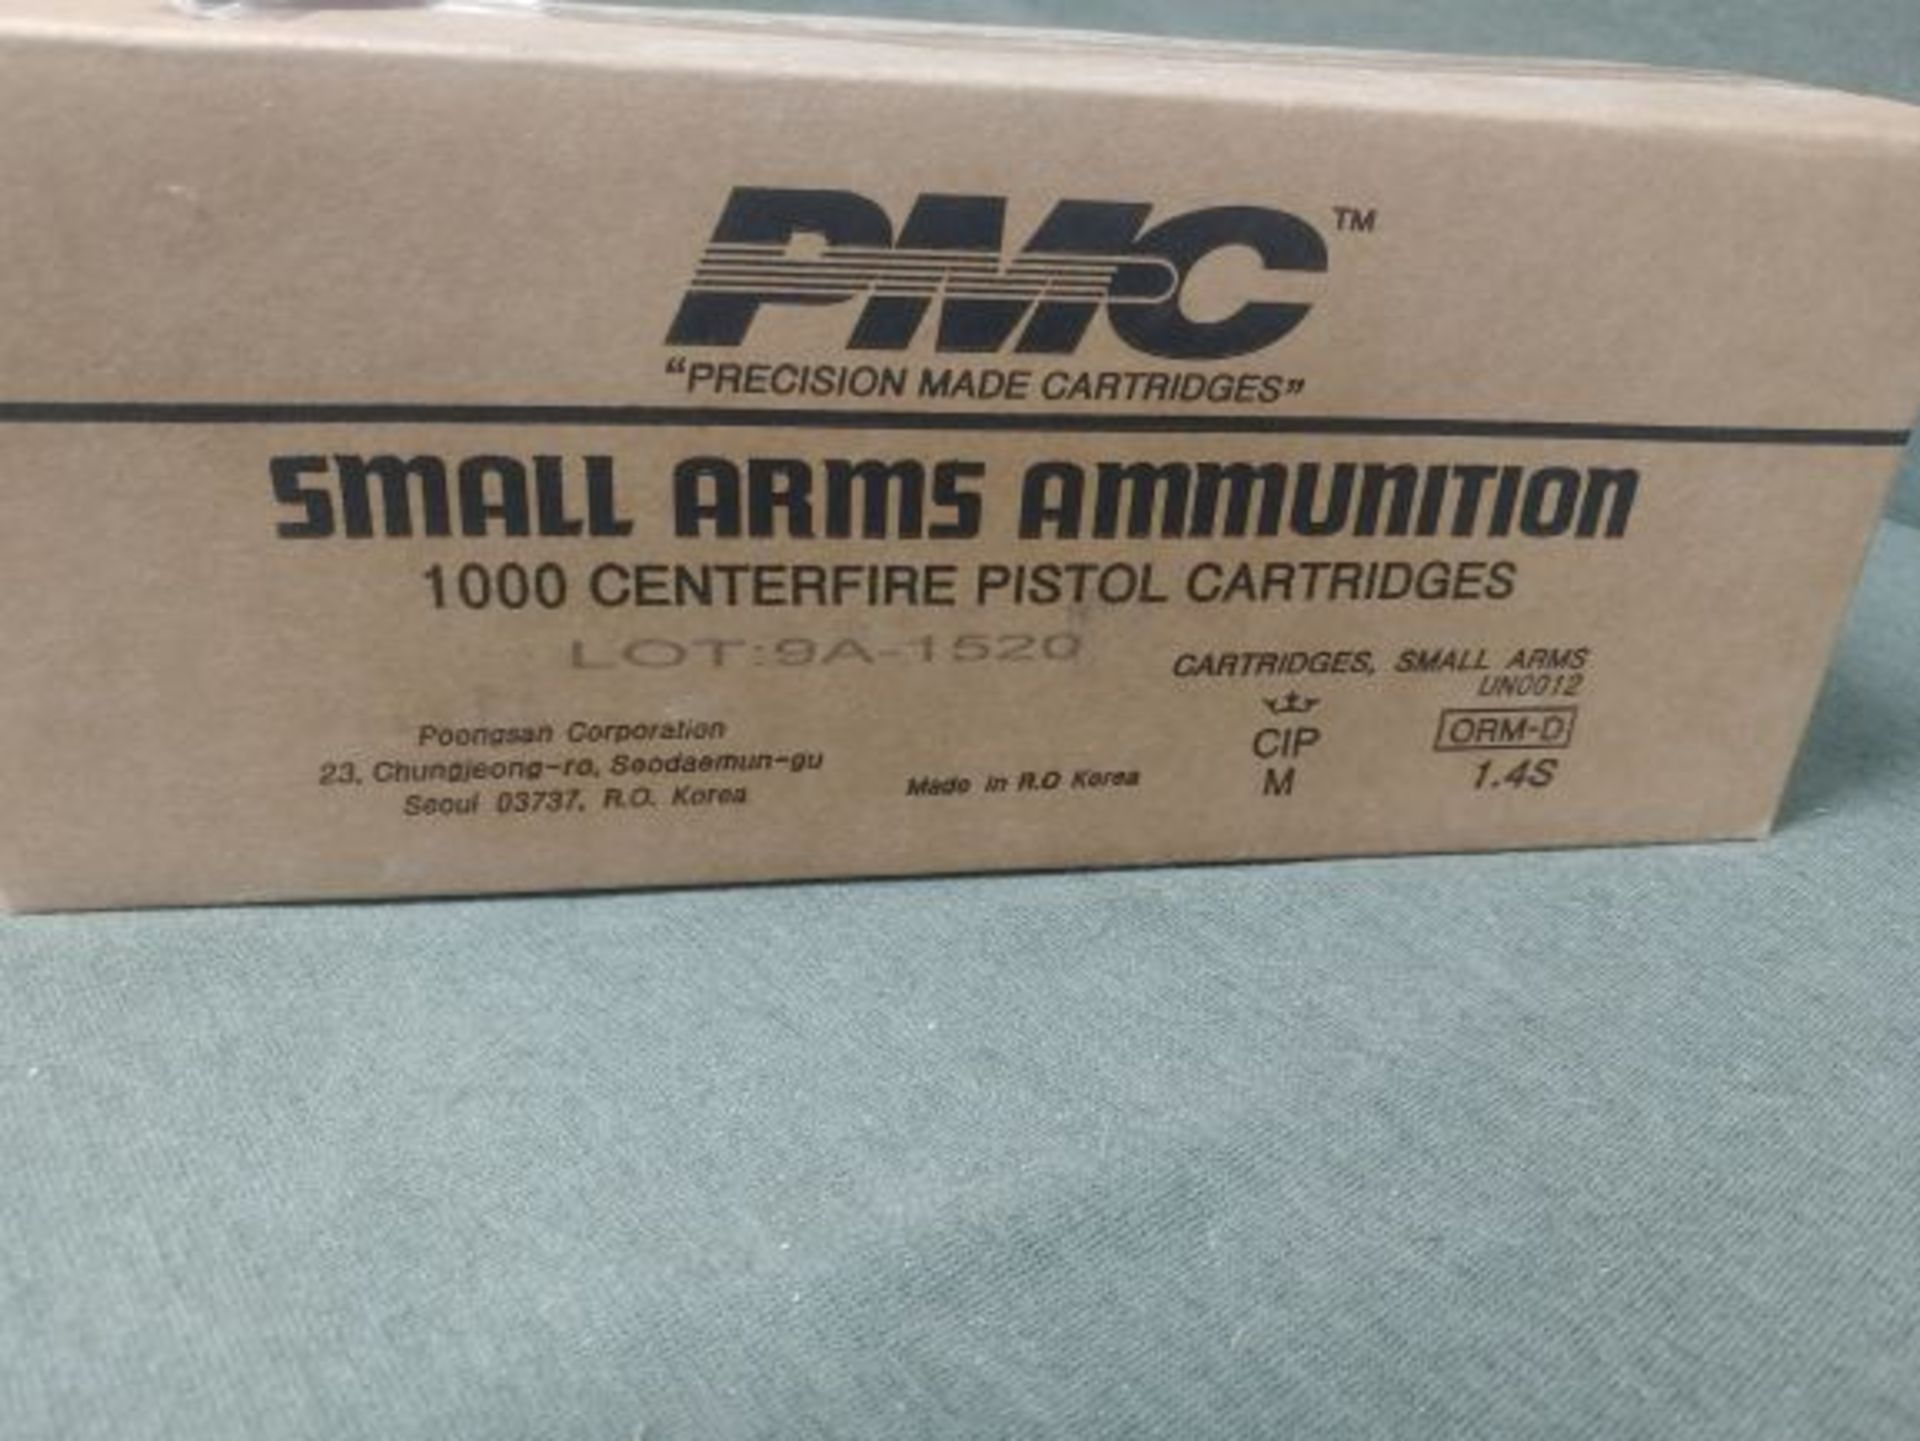 563. PMC 9mm 115gr. FMJ 1000 Rnd Case (1x the Money) - Image 2 of 2